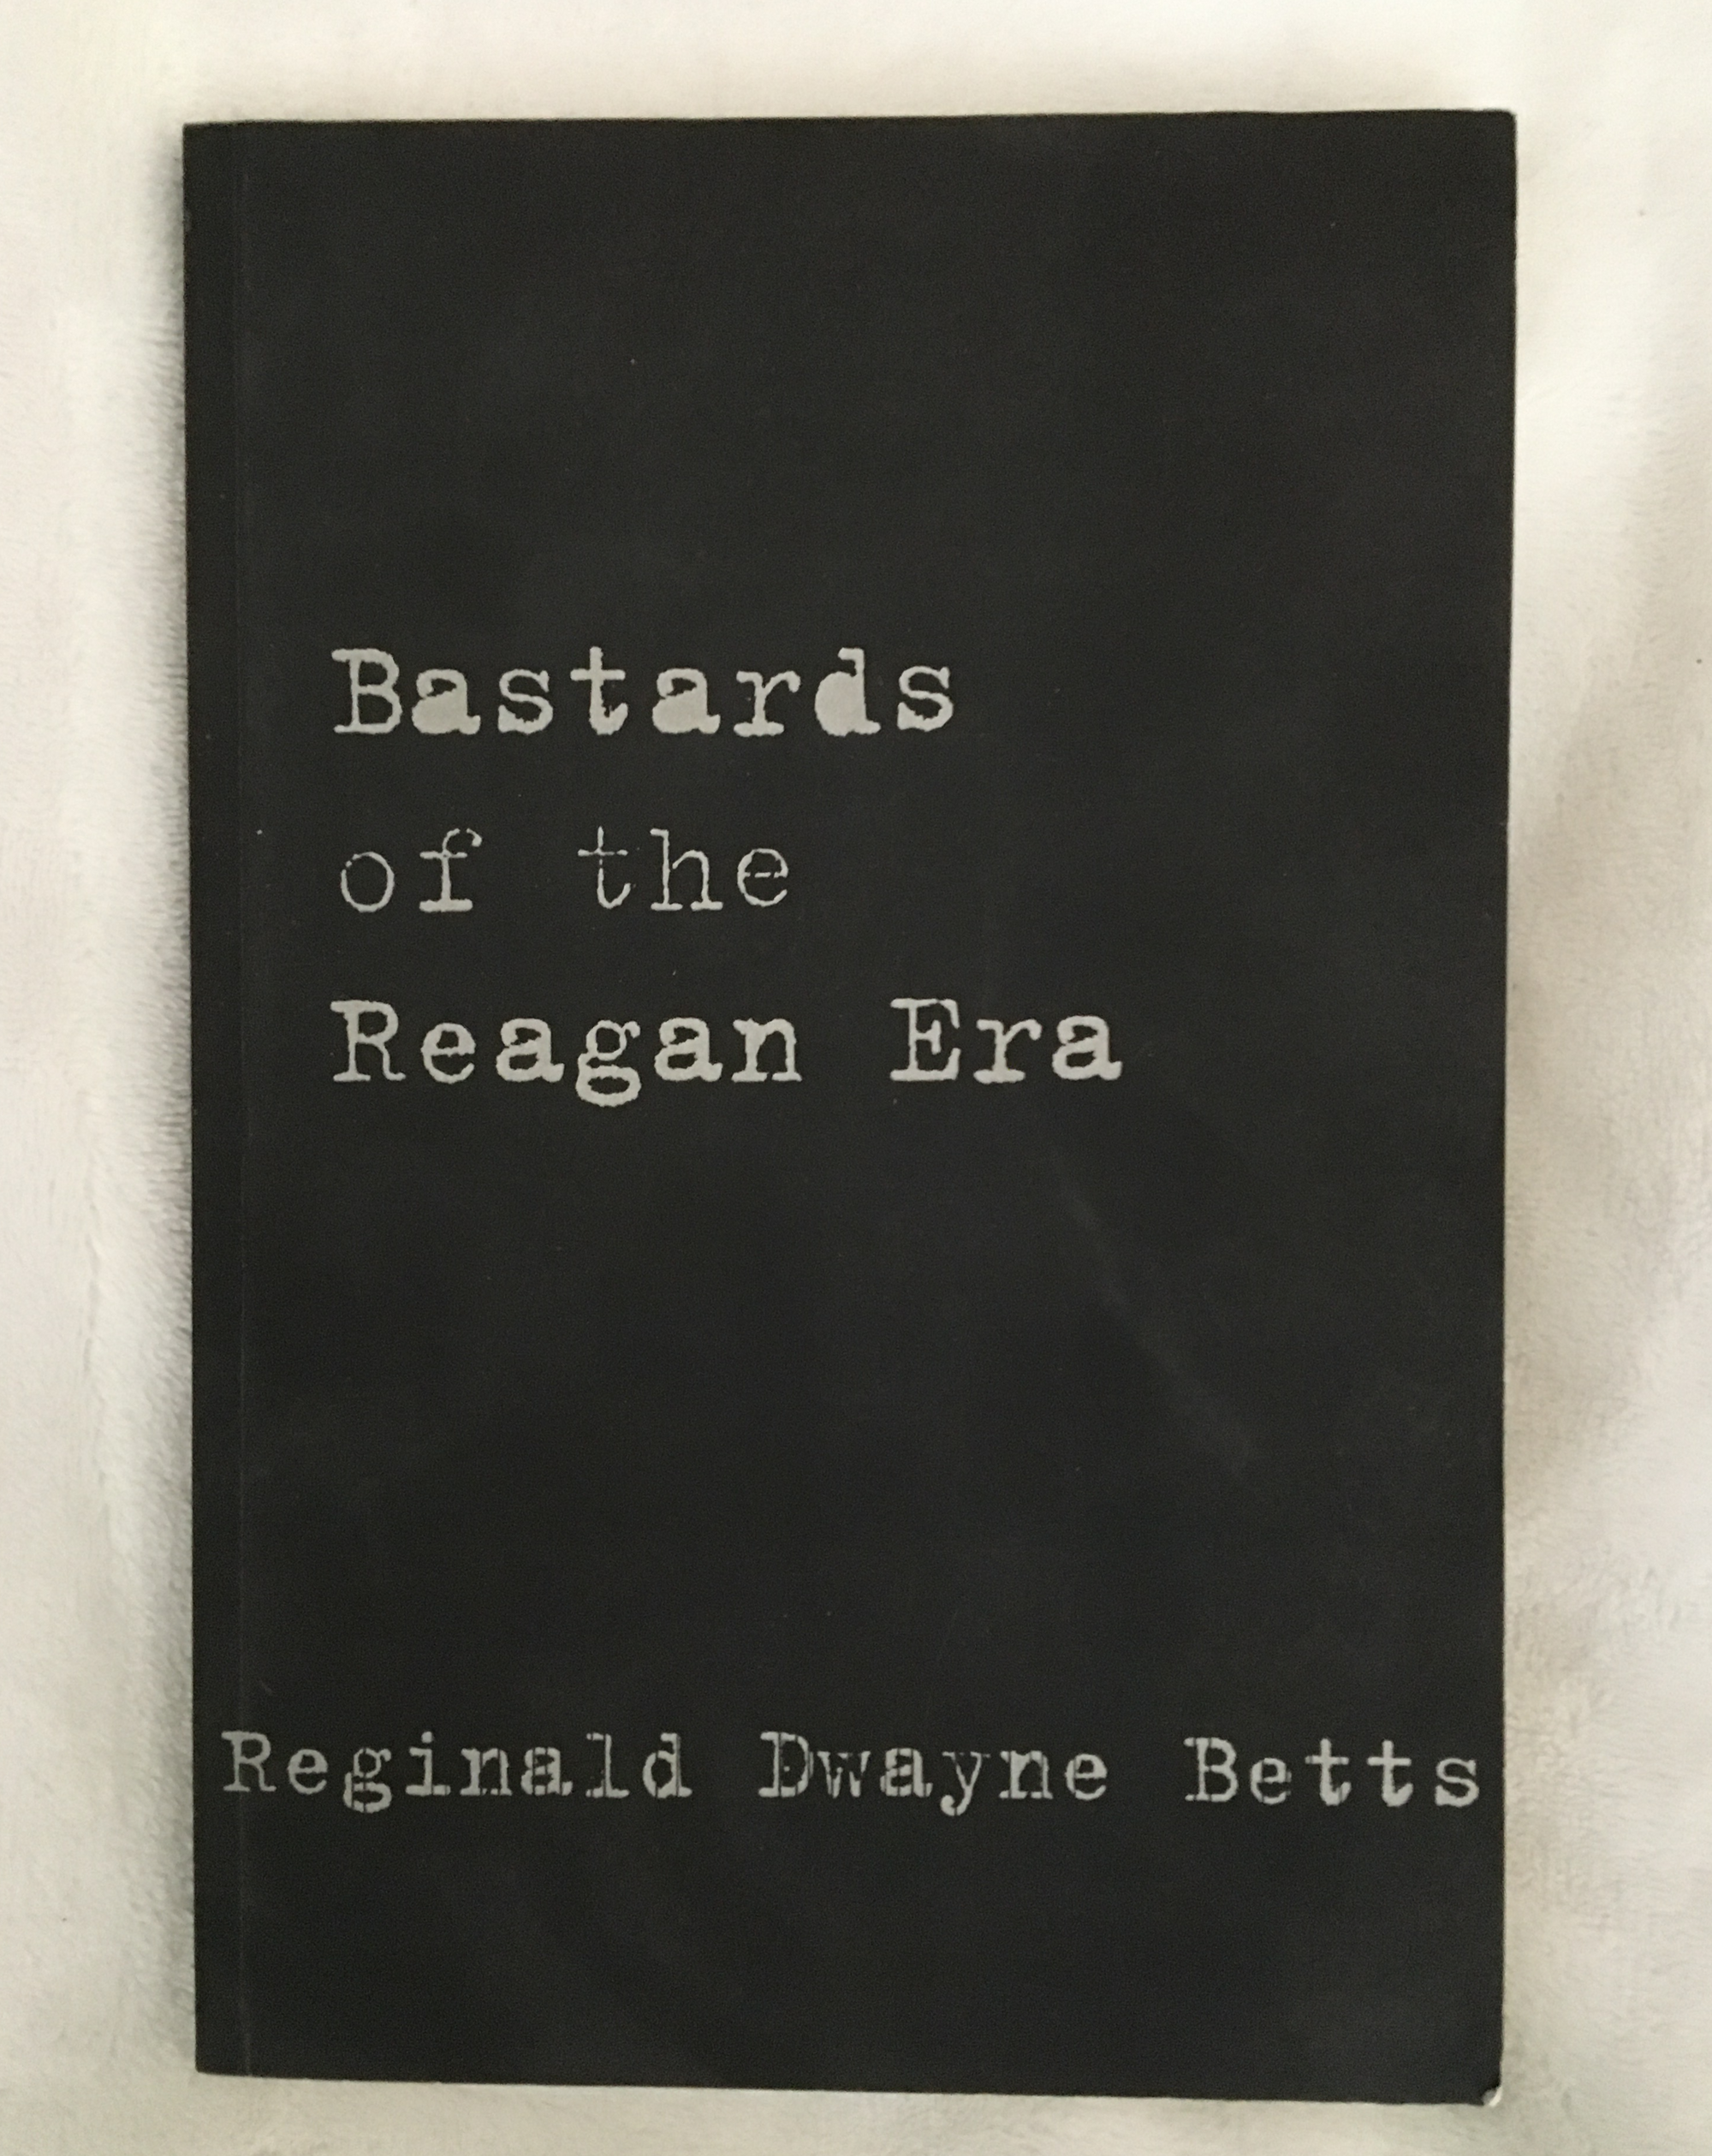 Bastards of the Reagan Era by Reginald Dwayne Betts, book, Ten Dollar Books, Ten Dollar Books